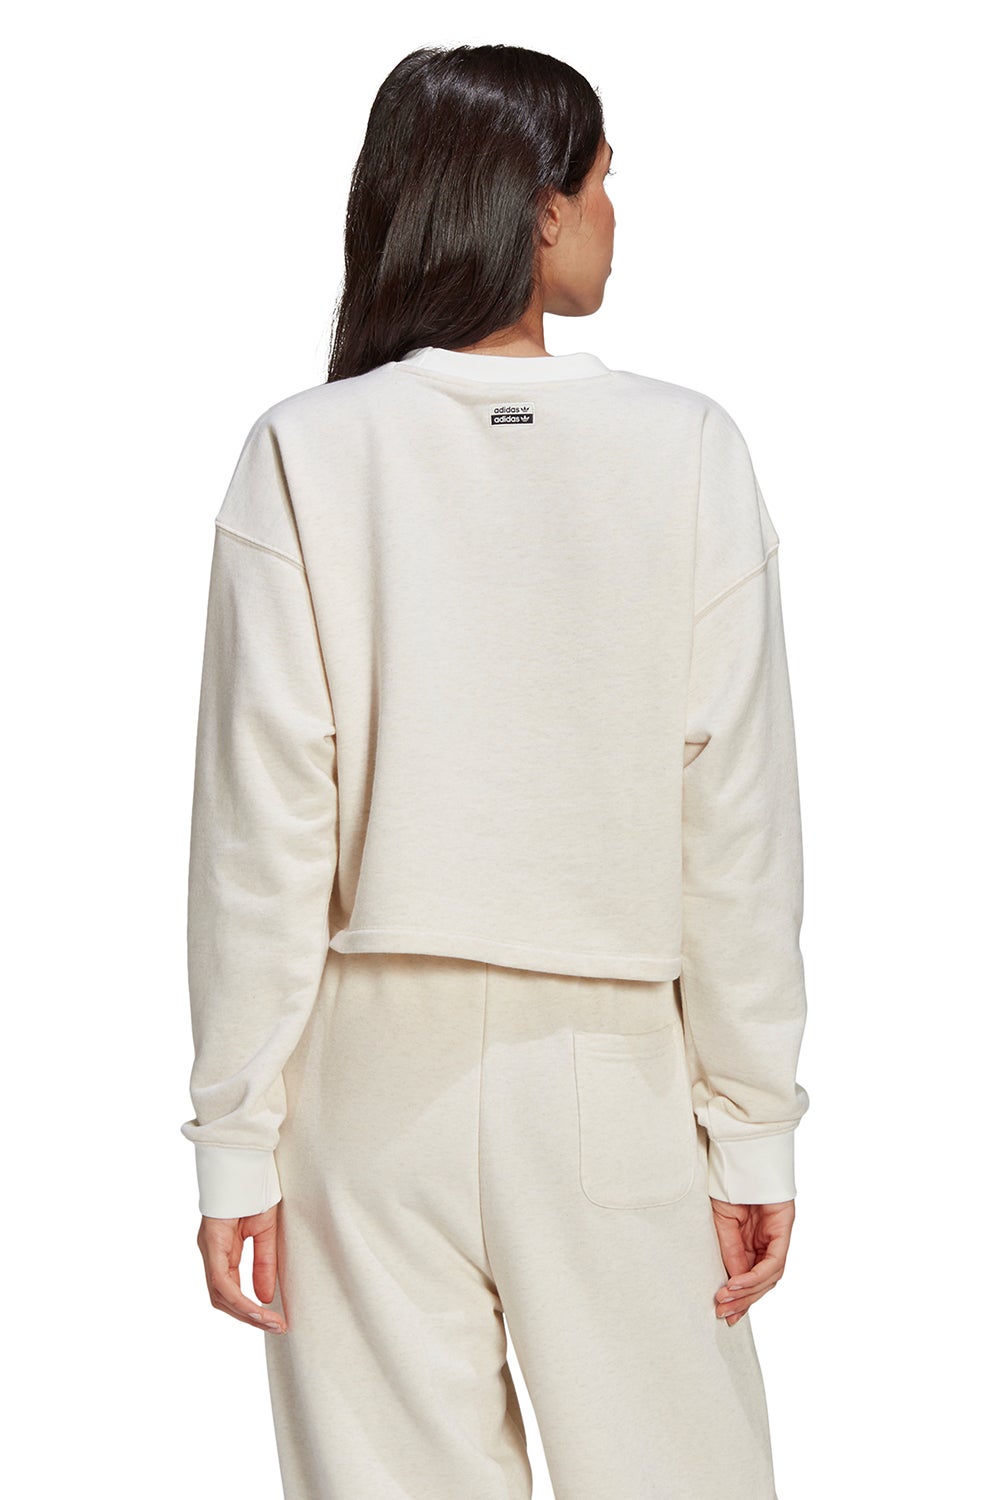 adidas RYV Sweatshirt Off White | Karen Walker